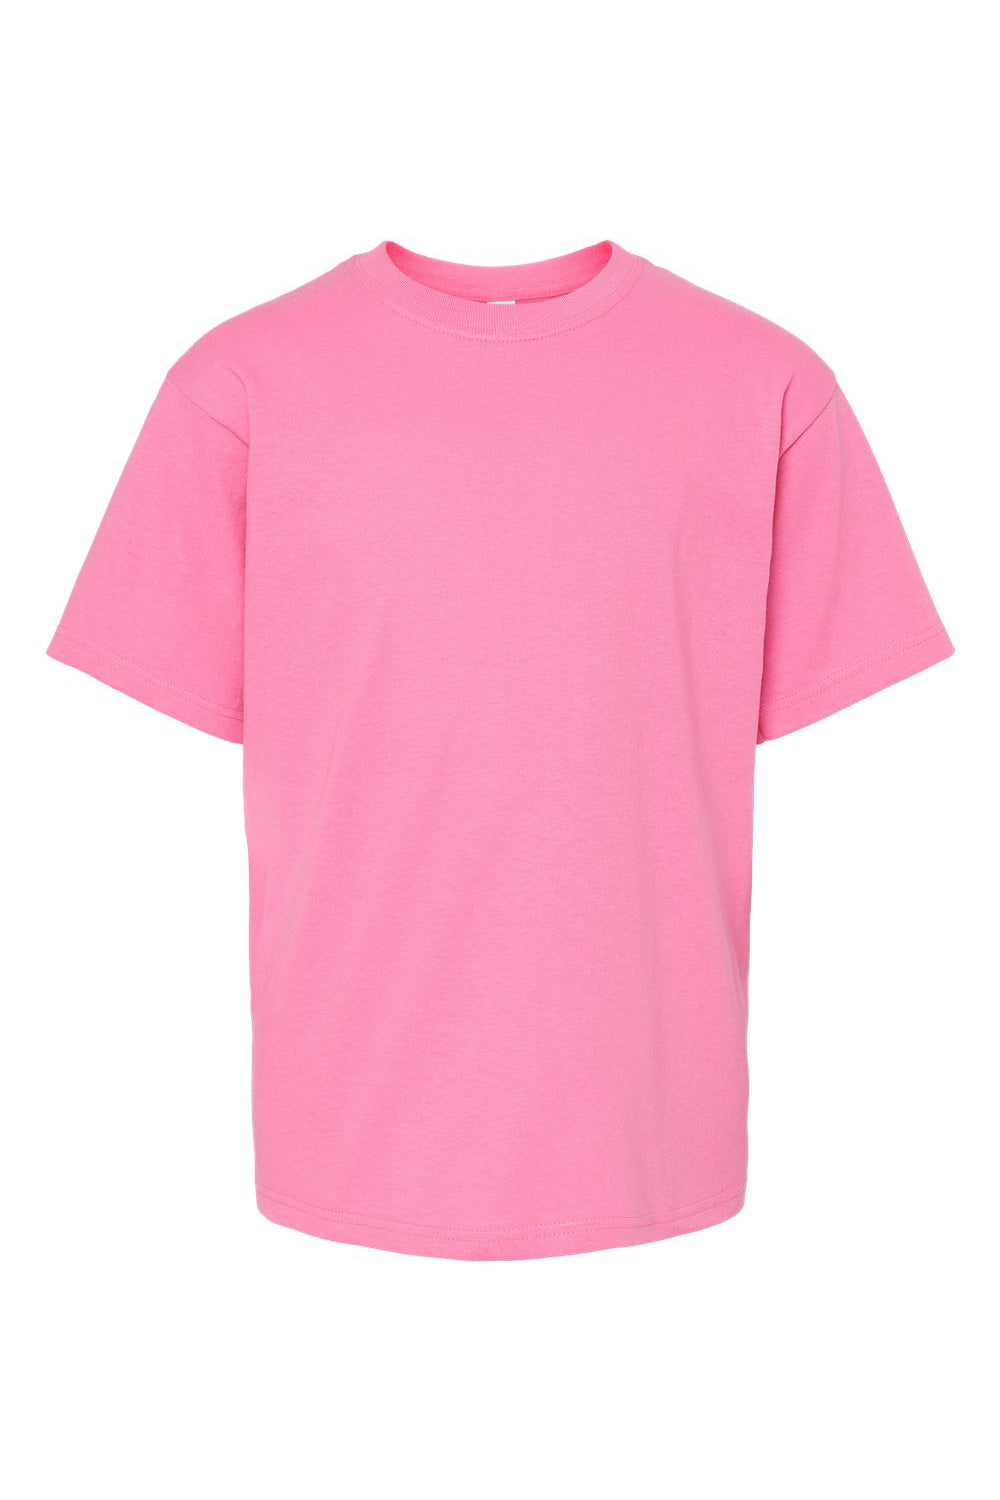 M&O 4850 Youth Gold Soft Touch Short Sleeve Crewneck T-Shirt Azalea Pink Flat Front